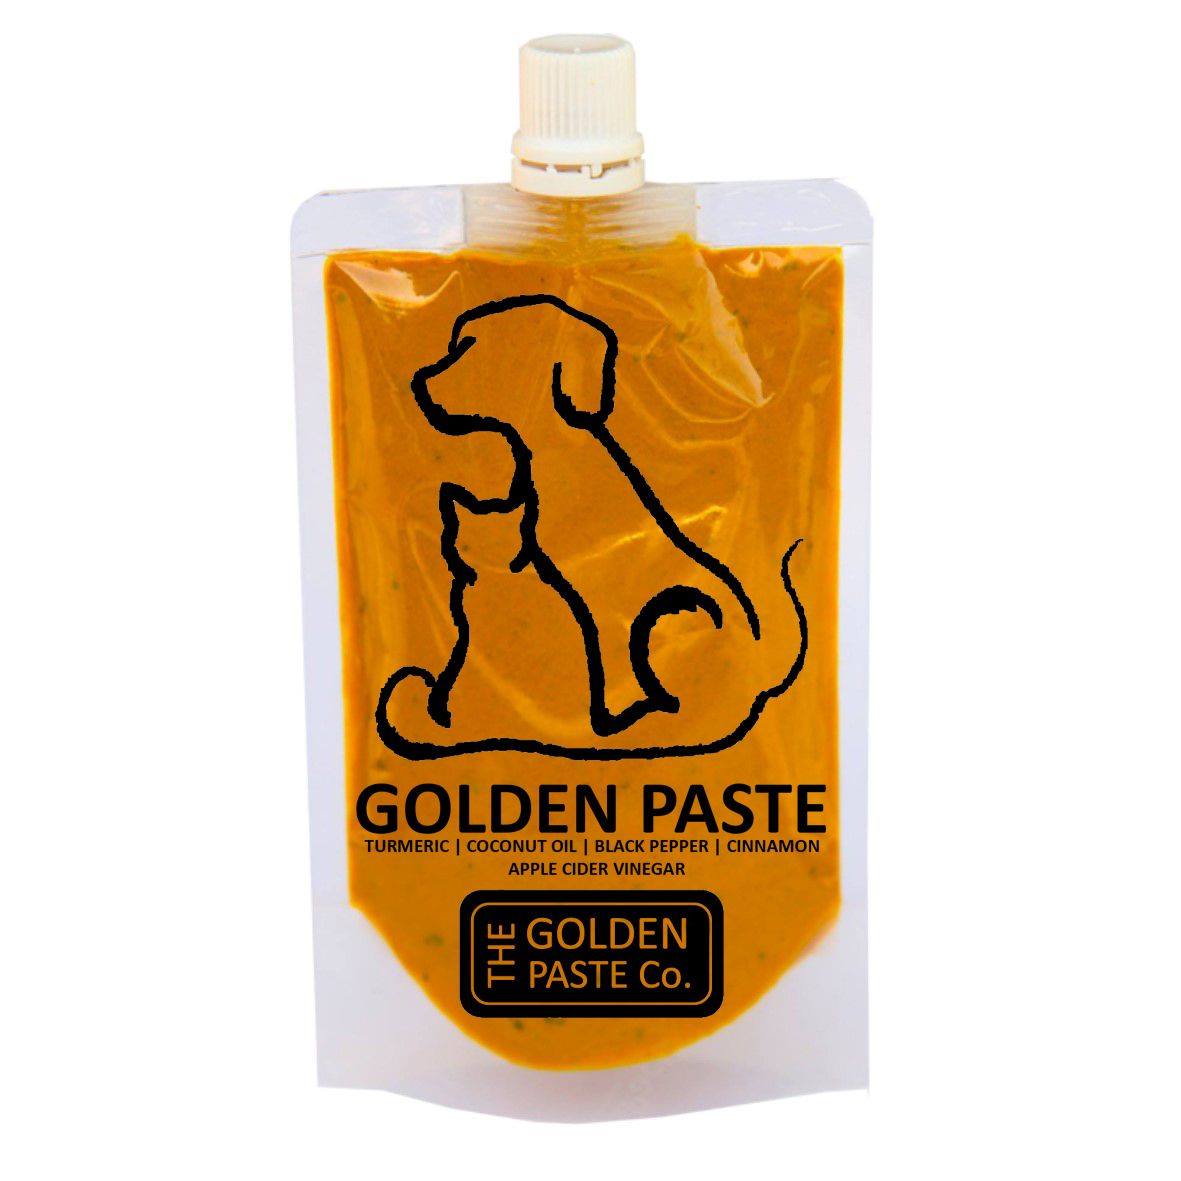 Golden Paste Co